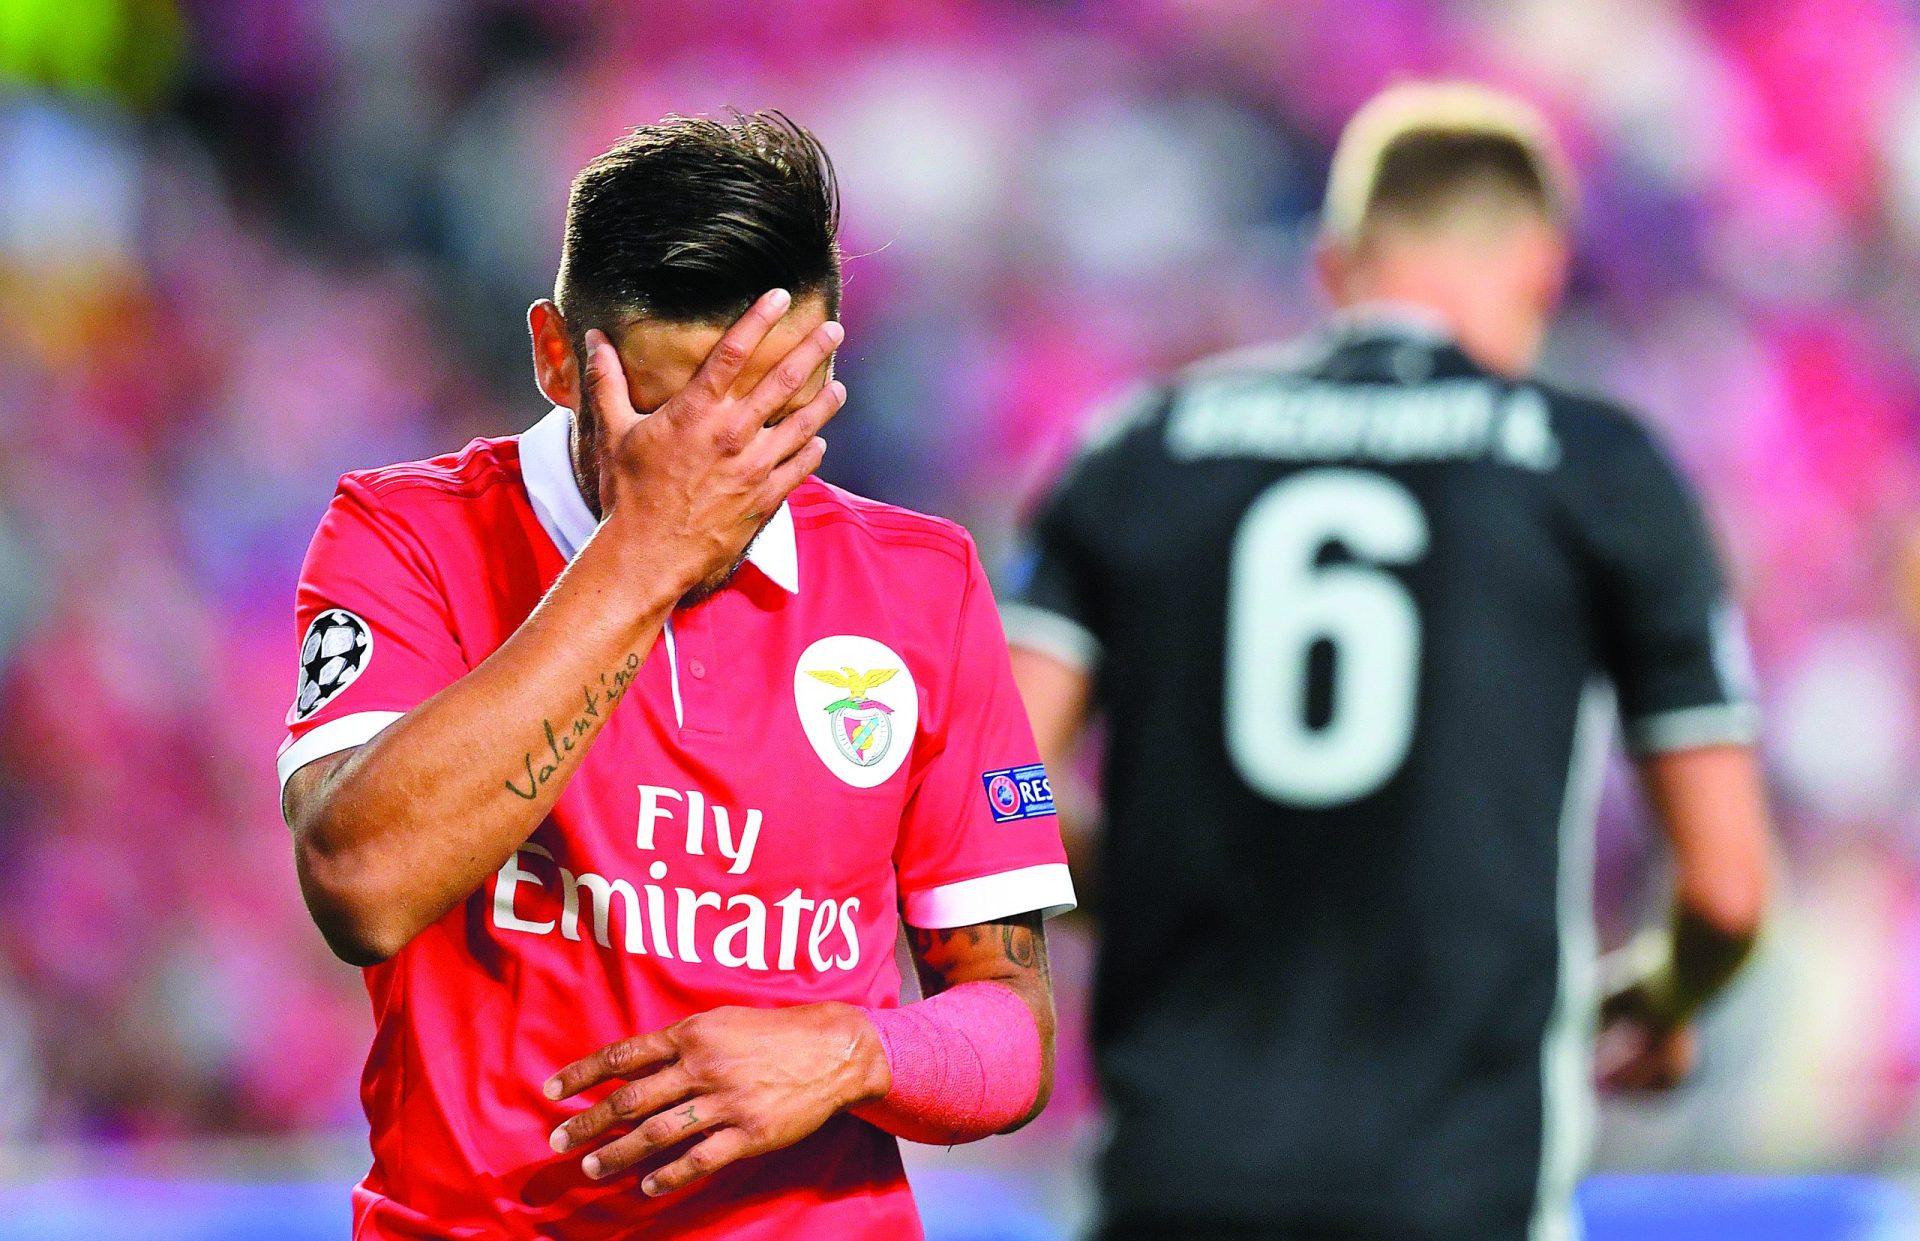 Benfica sai derrotado por 2-1 na estreia da Champions